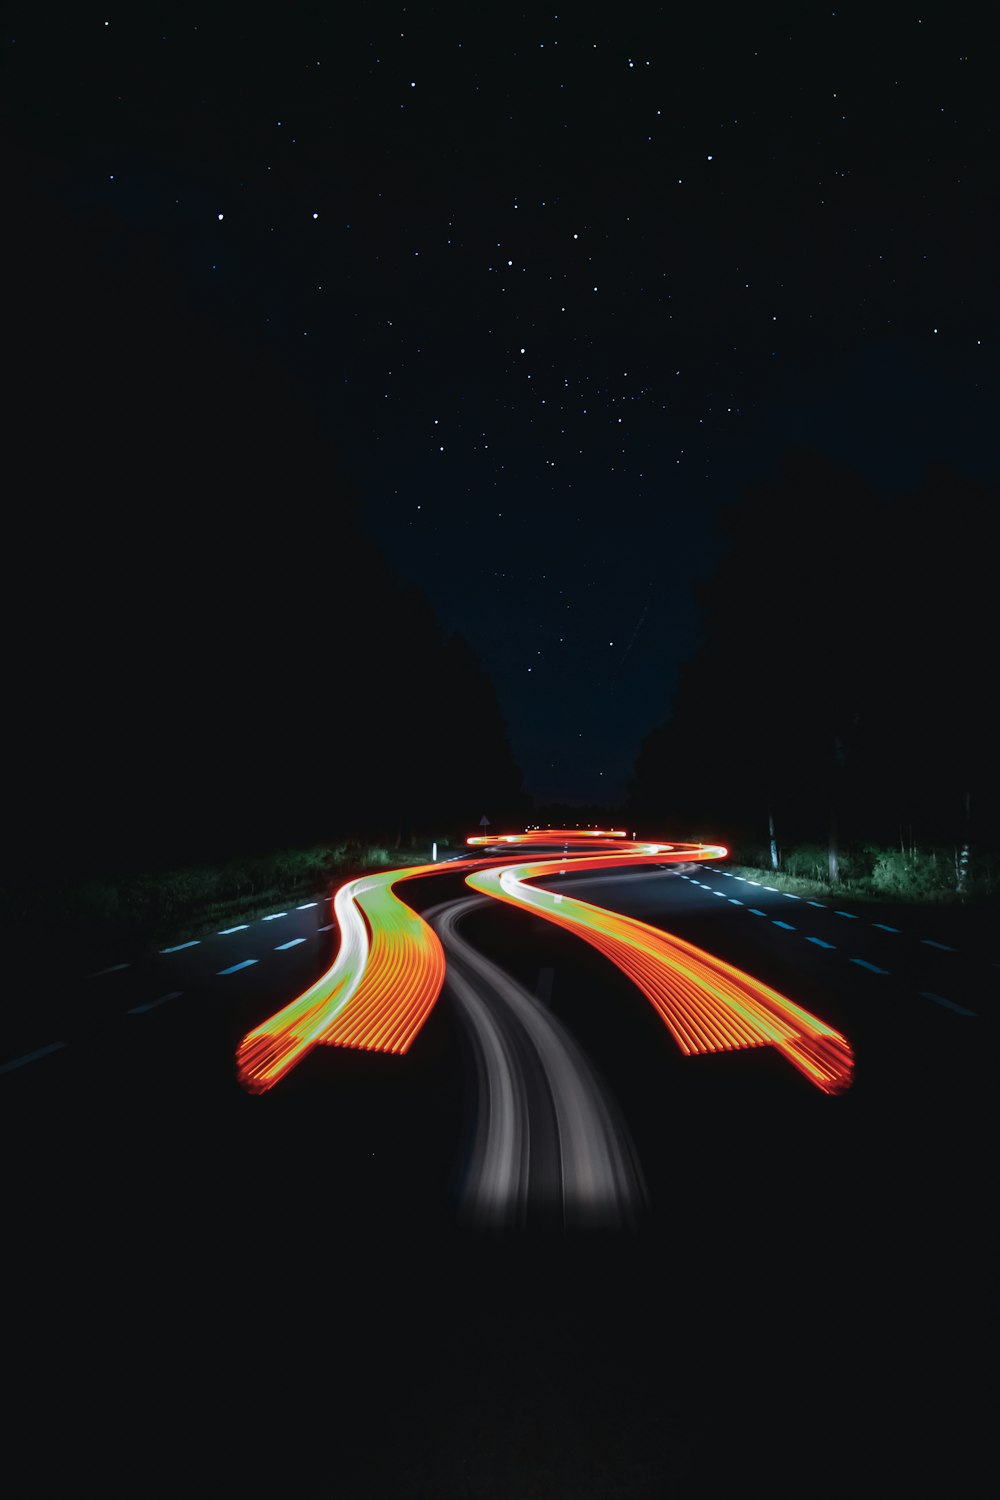 Carretera negra y naranja durante la noche